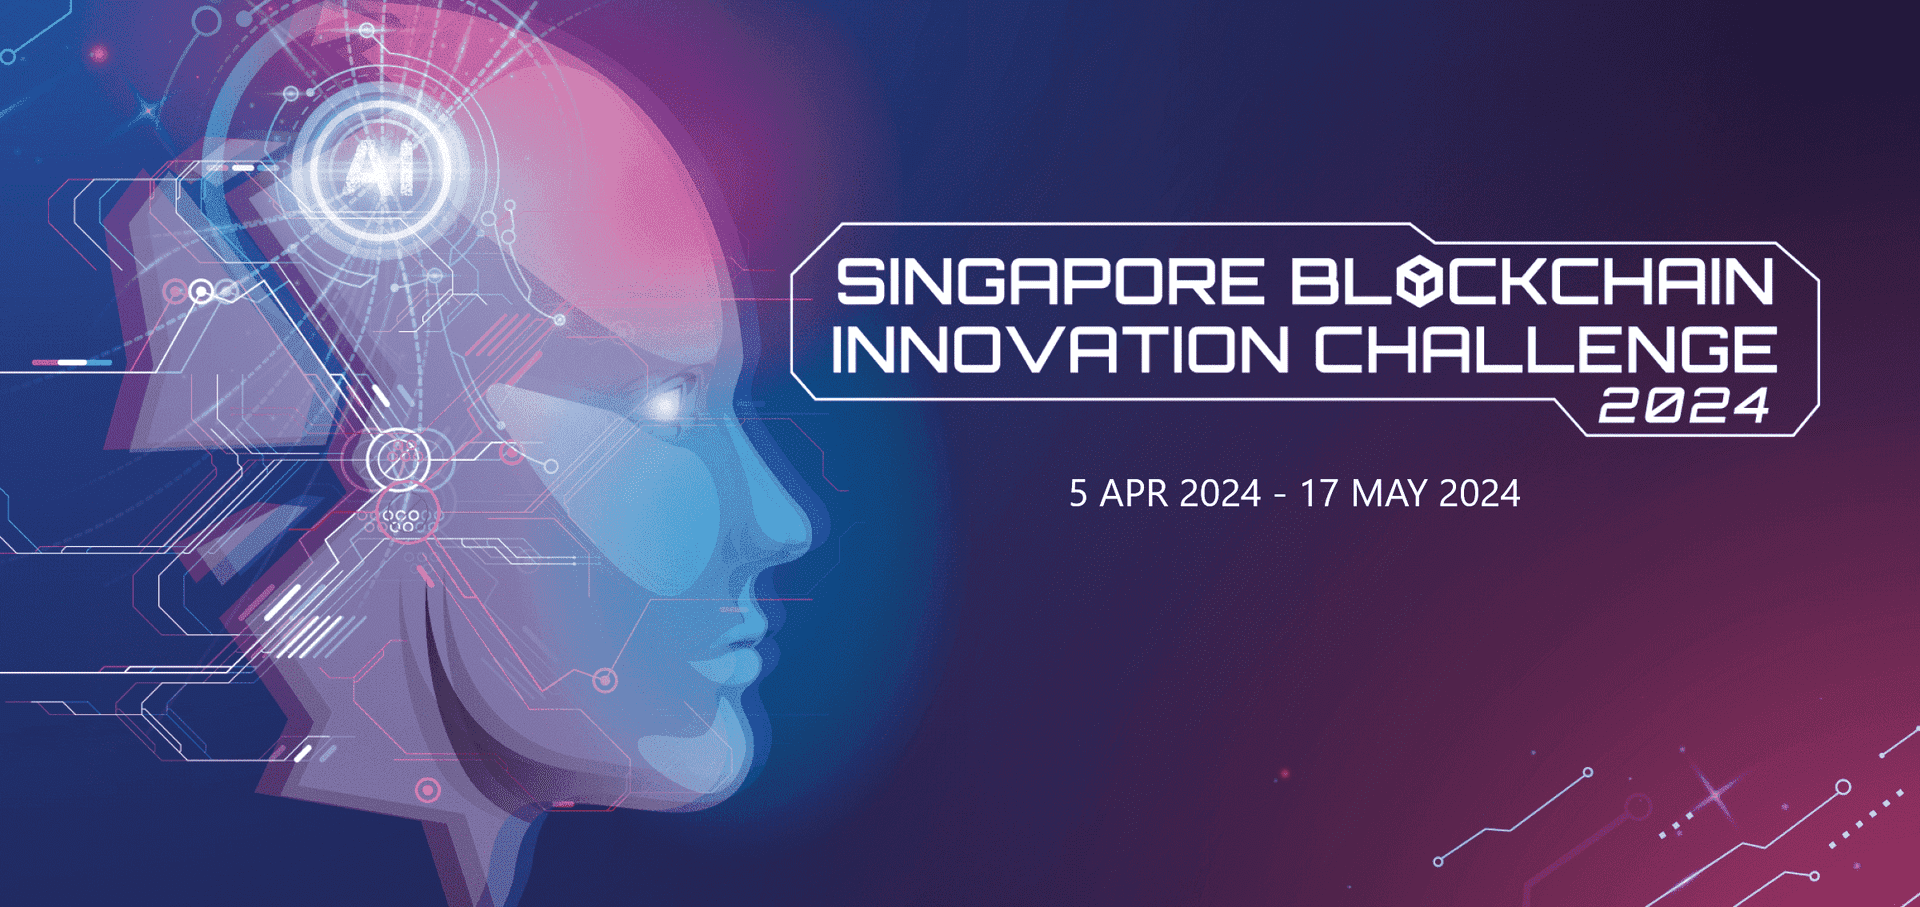 Singapore Blockchain Innovation Challenge 2024